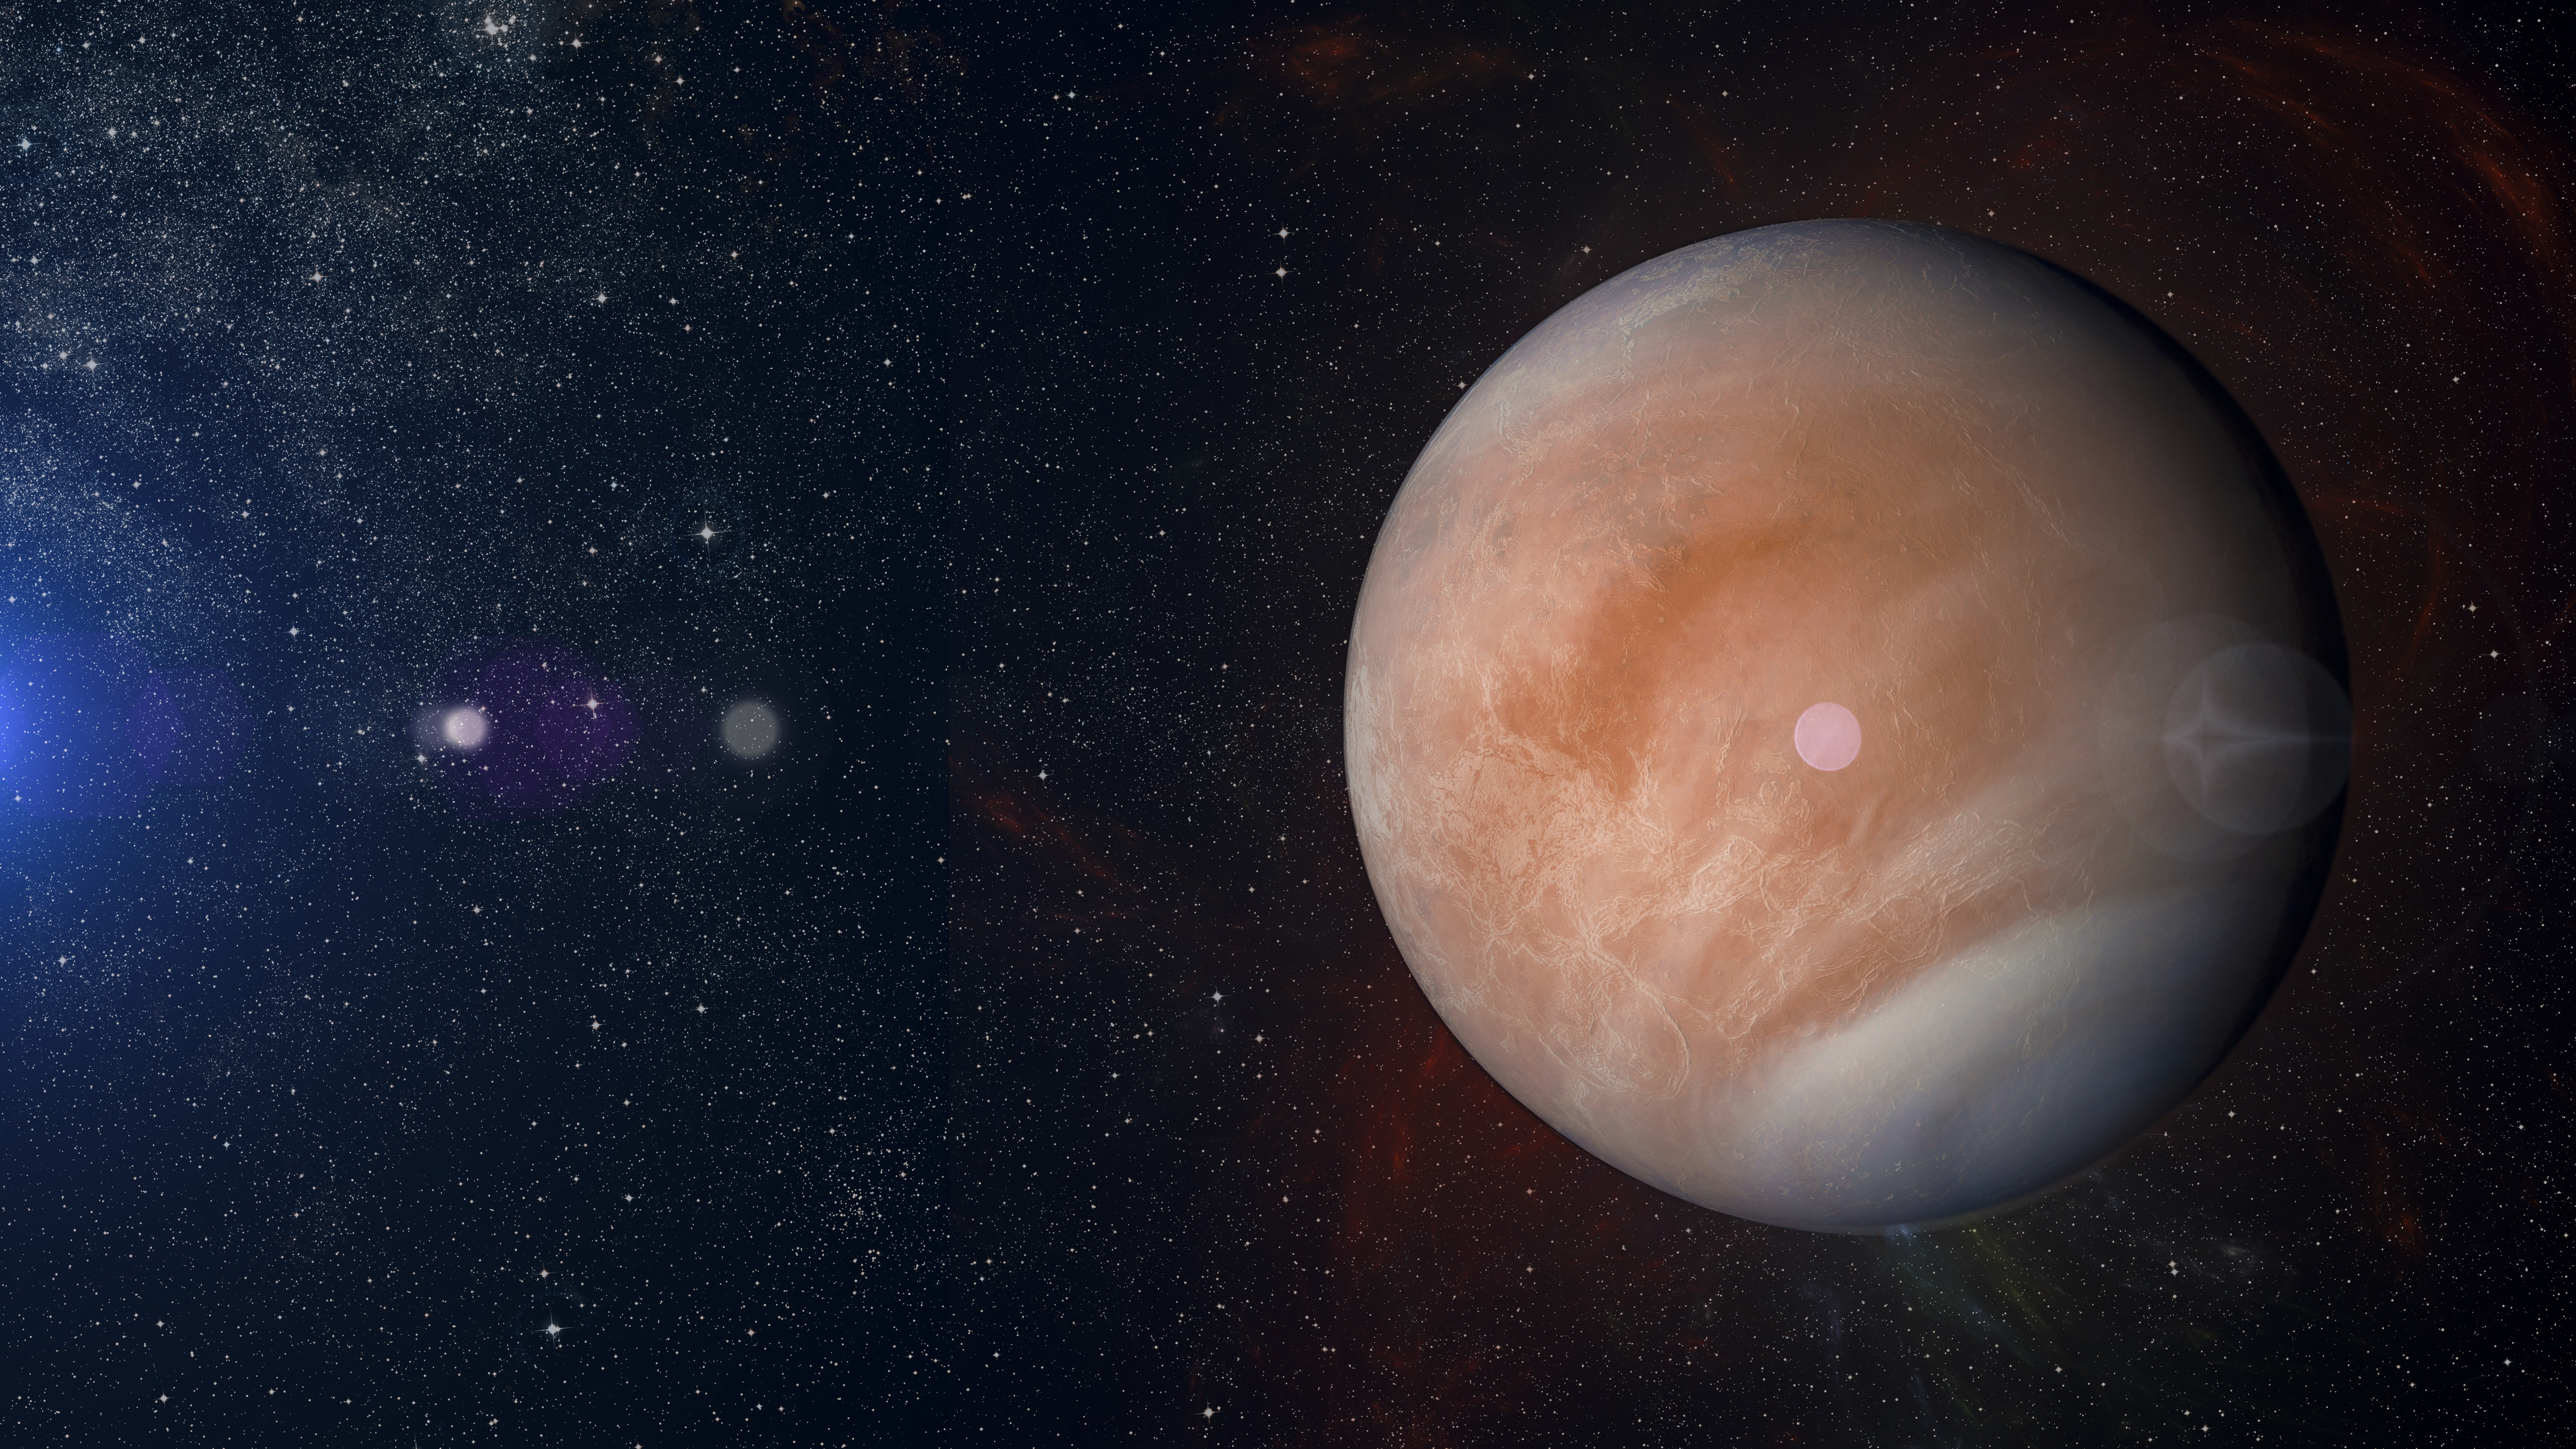 Solar system planet on nebula background 3d rendering